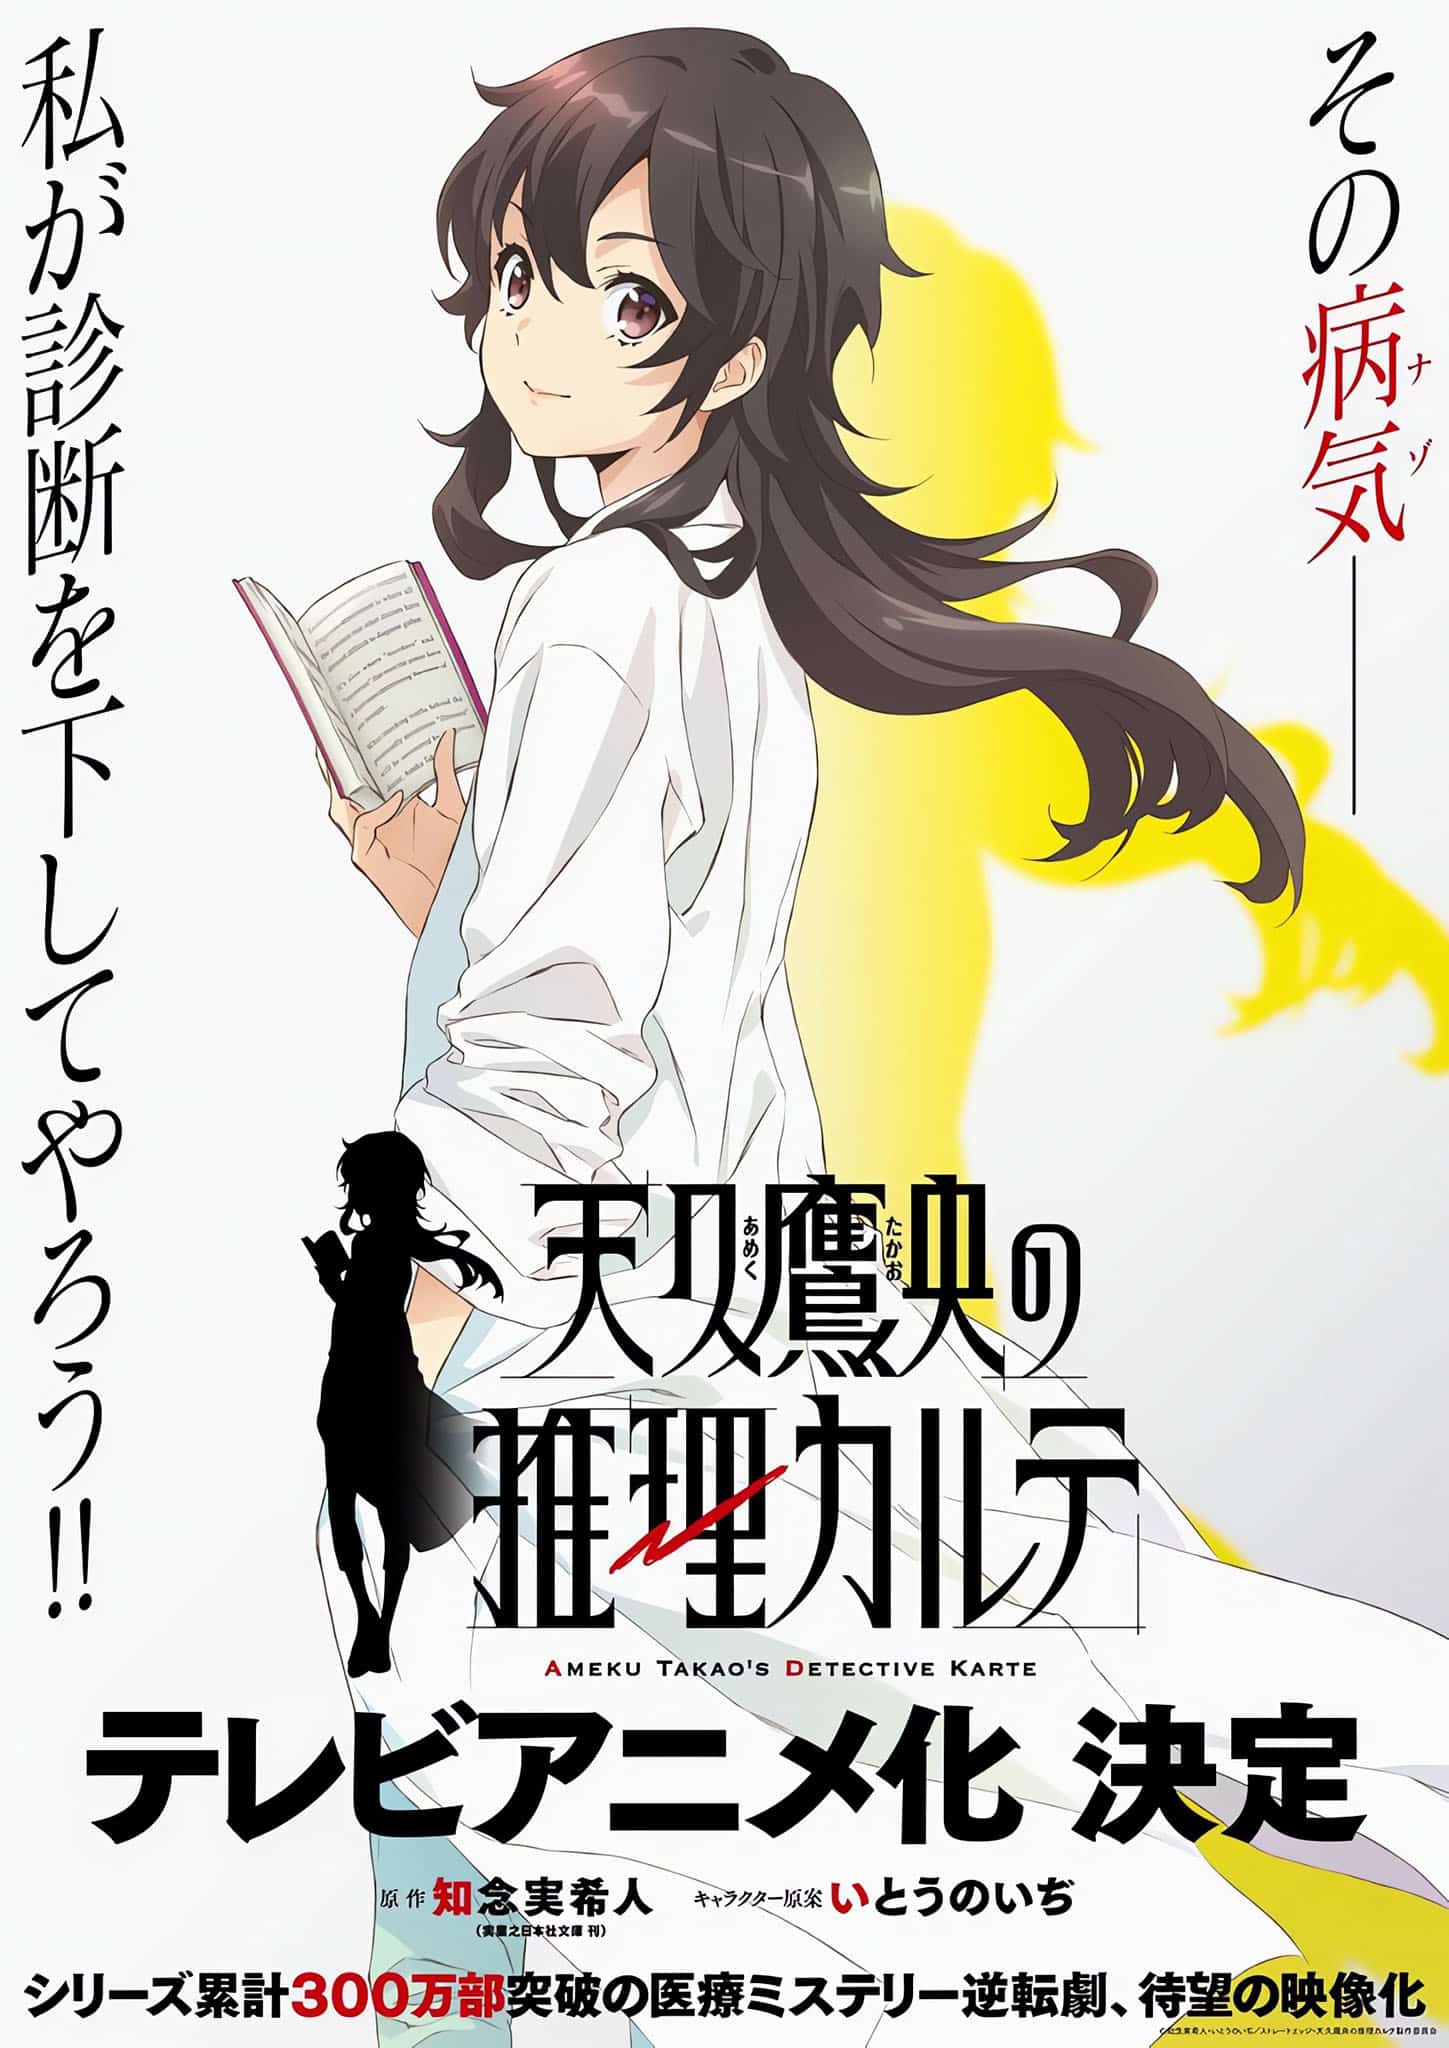 Premier visuel pour l'anime Ameku Takao's Detective Karte (Ameku Takao no Suiri Karte).